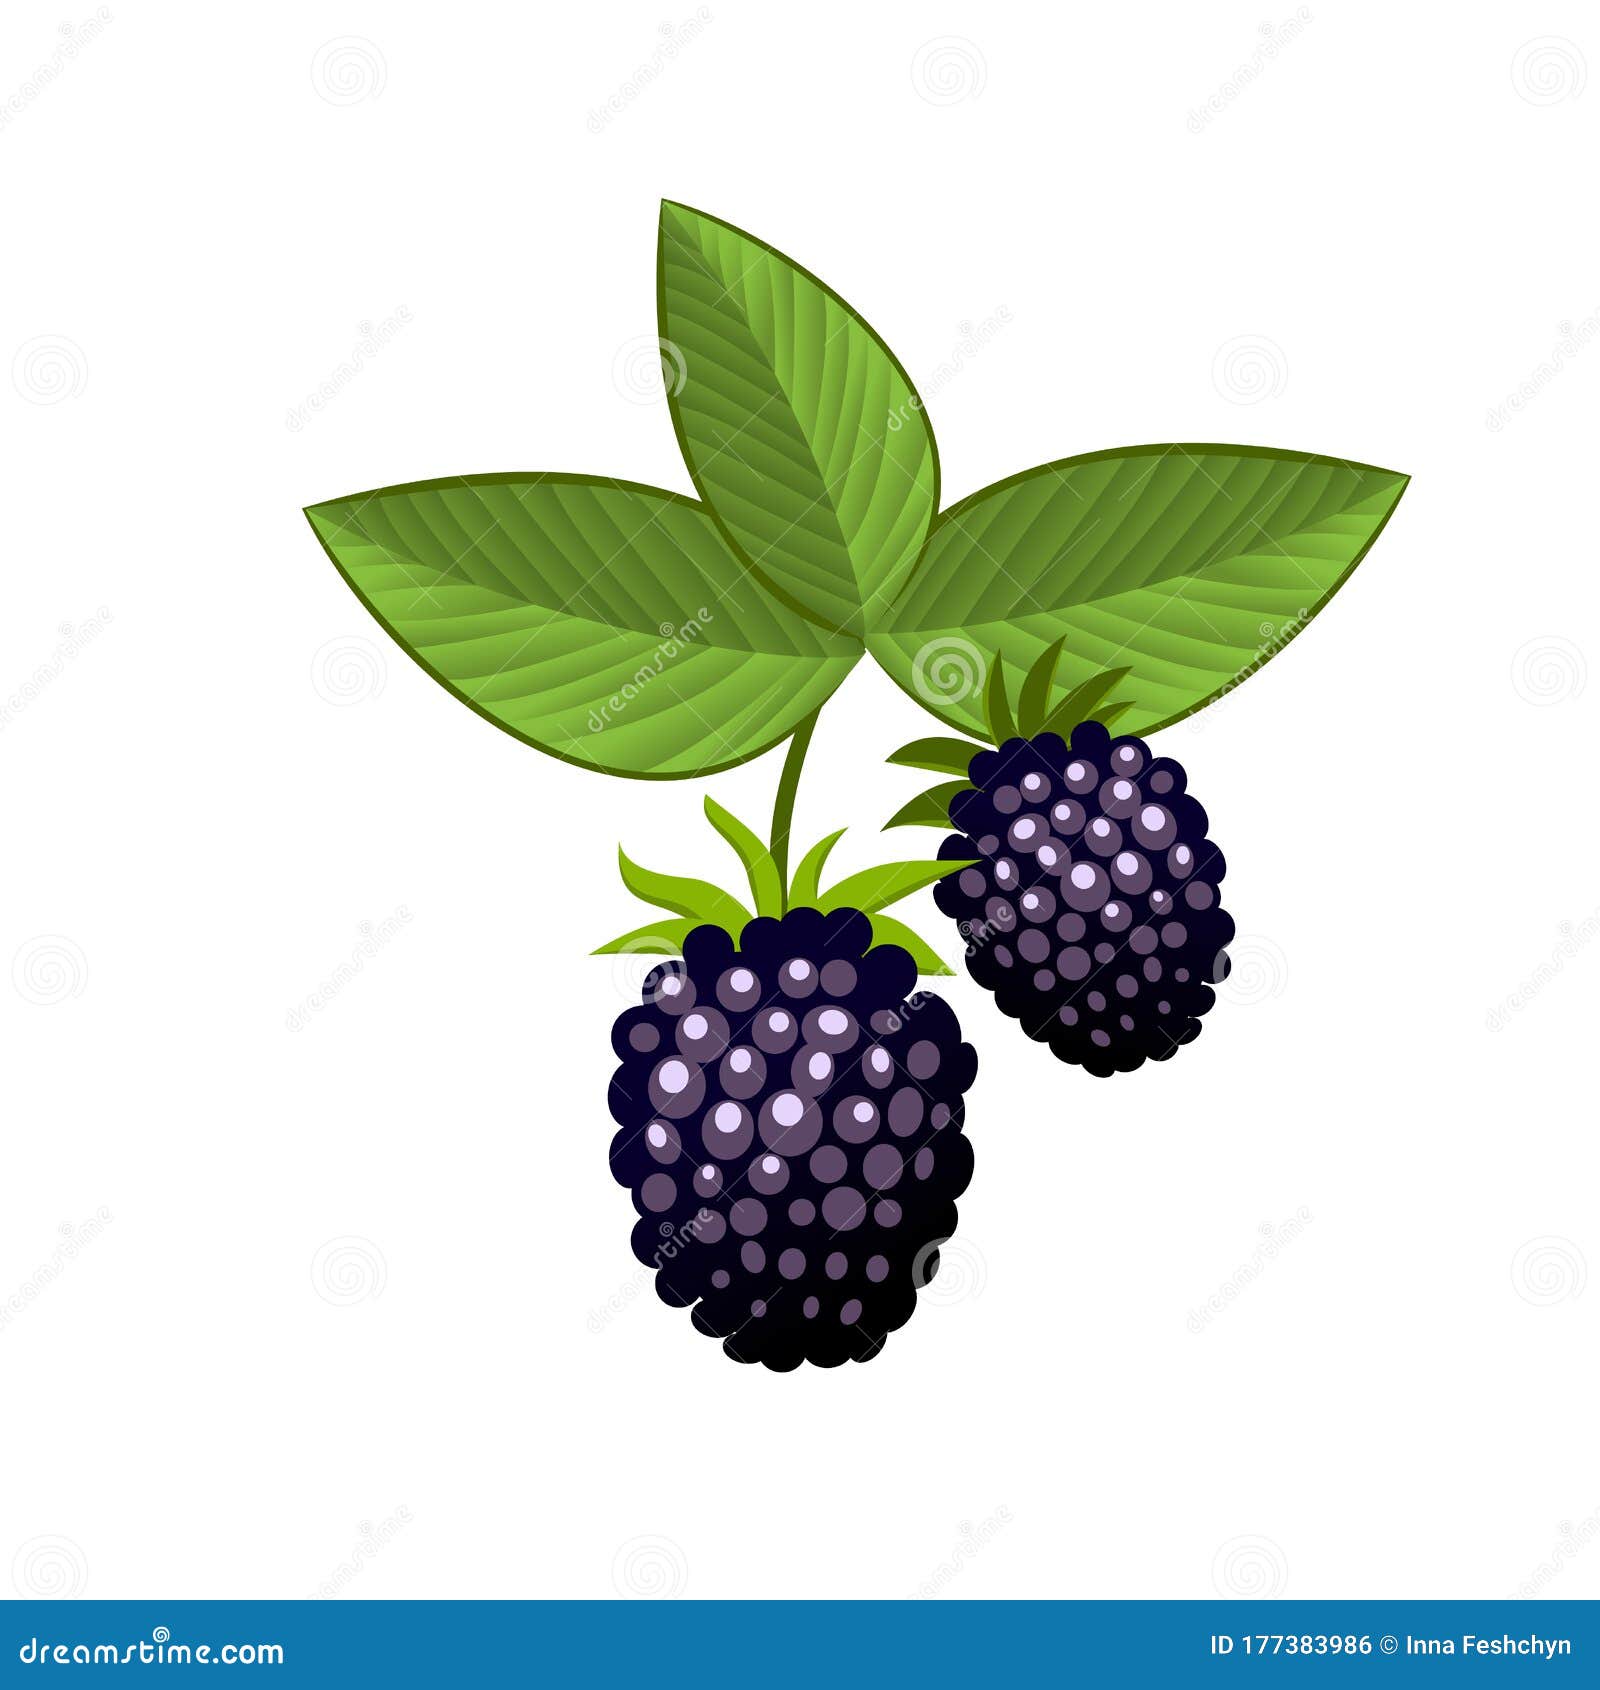 https://thumbs.dreamstime.com/z/hand-drawn-branch-bramble-berries-leaves-fresh-summer-berries-fruit-botany-cartoon-vector-illustration-fresh-organic-food-177383986.jpg